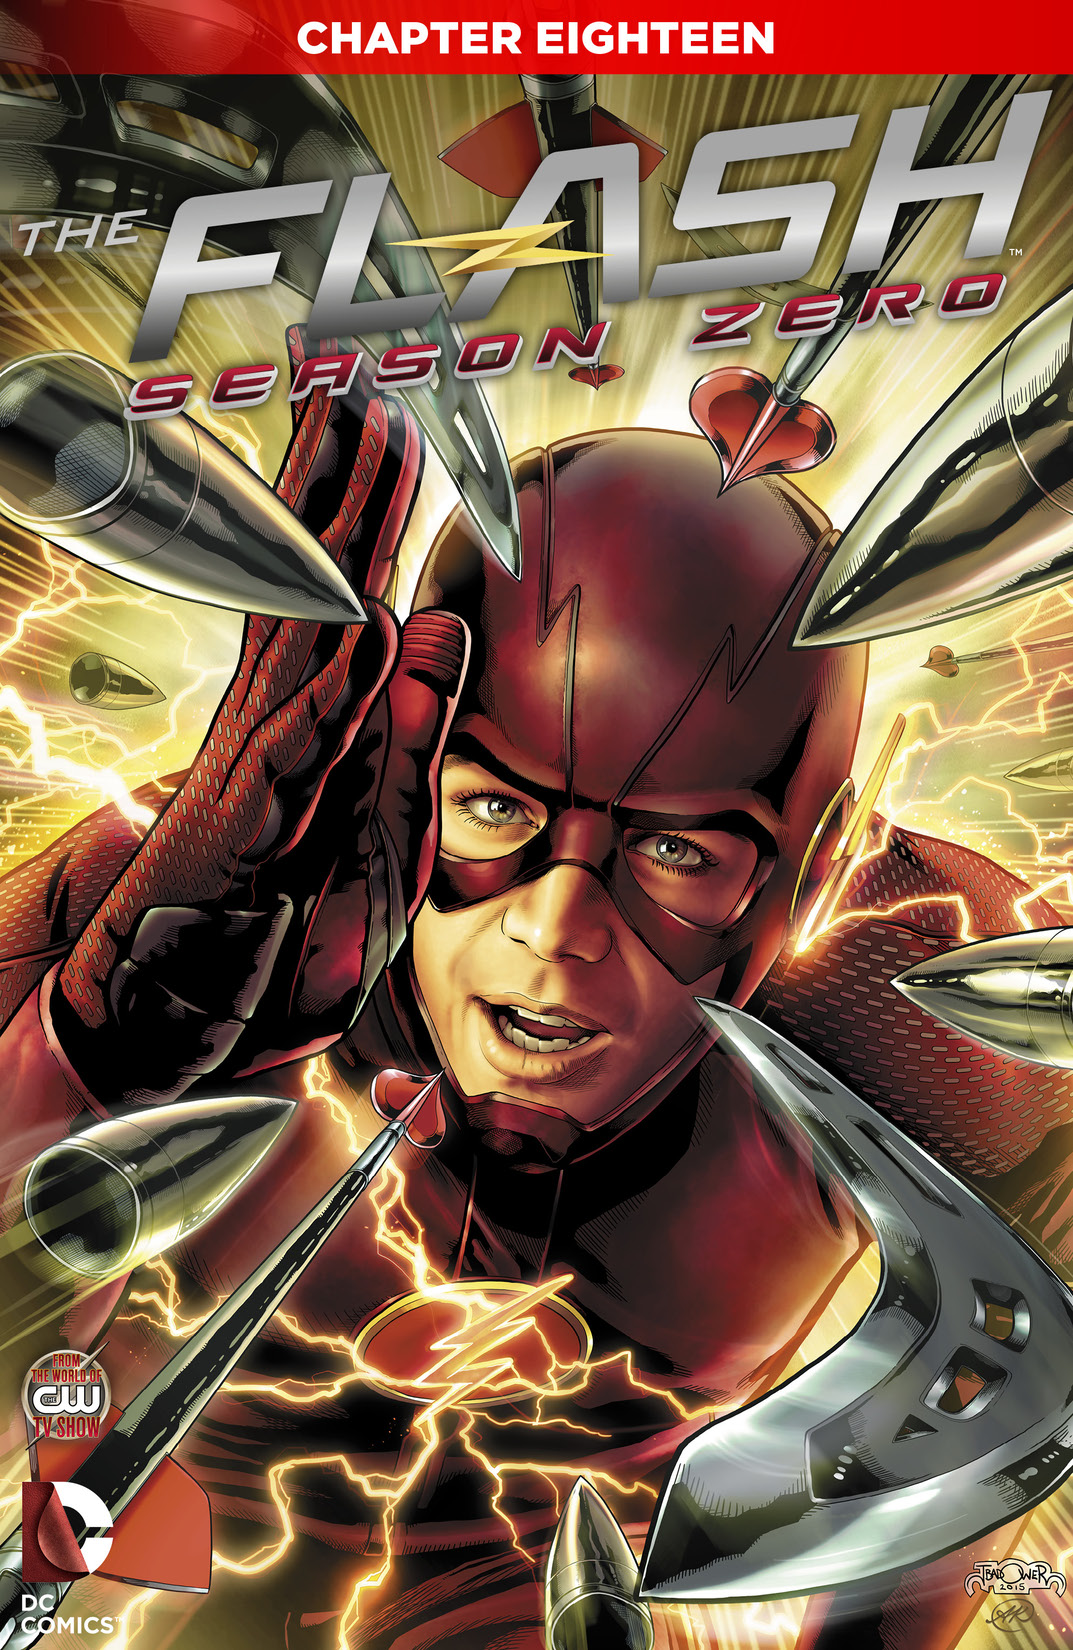 The Flash: Season Zero #18 preview images